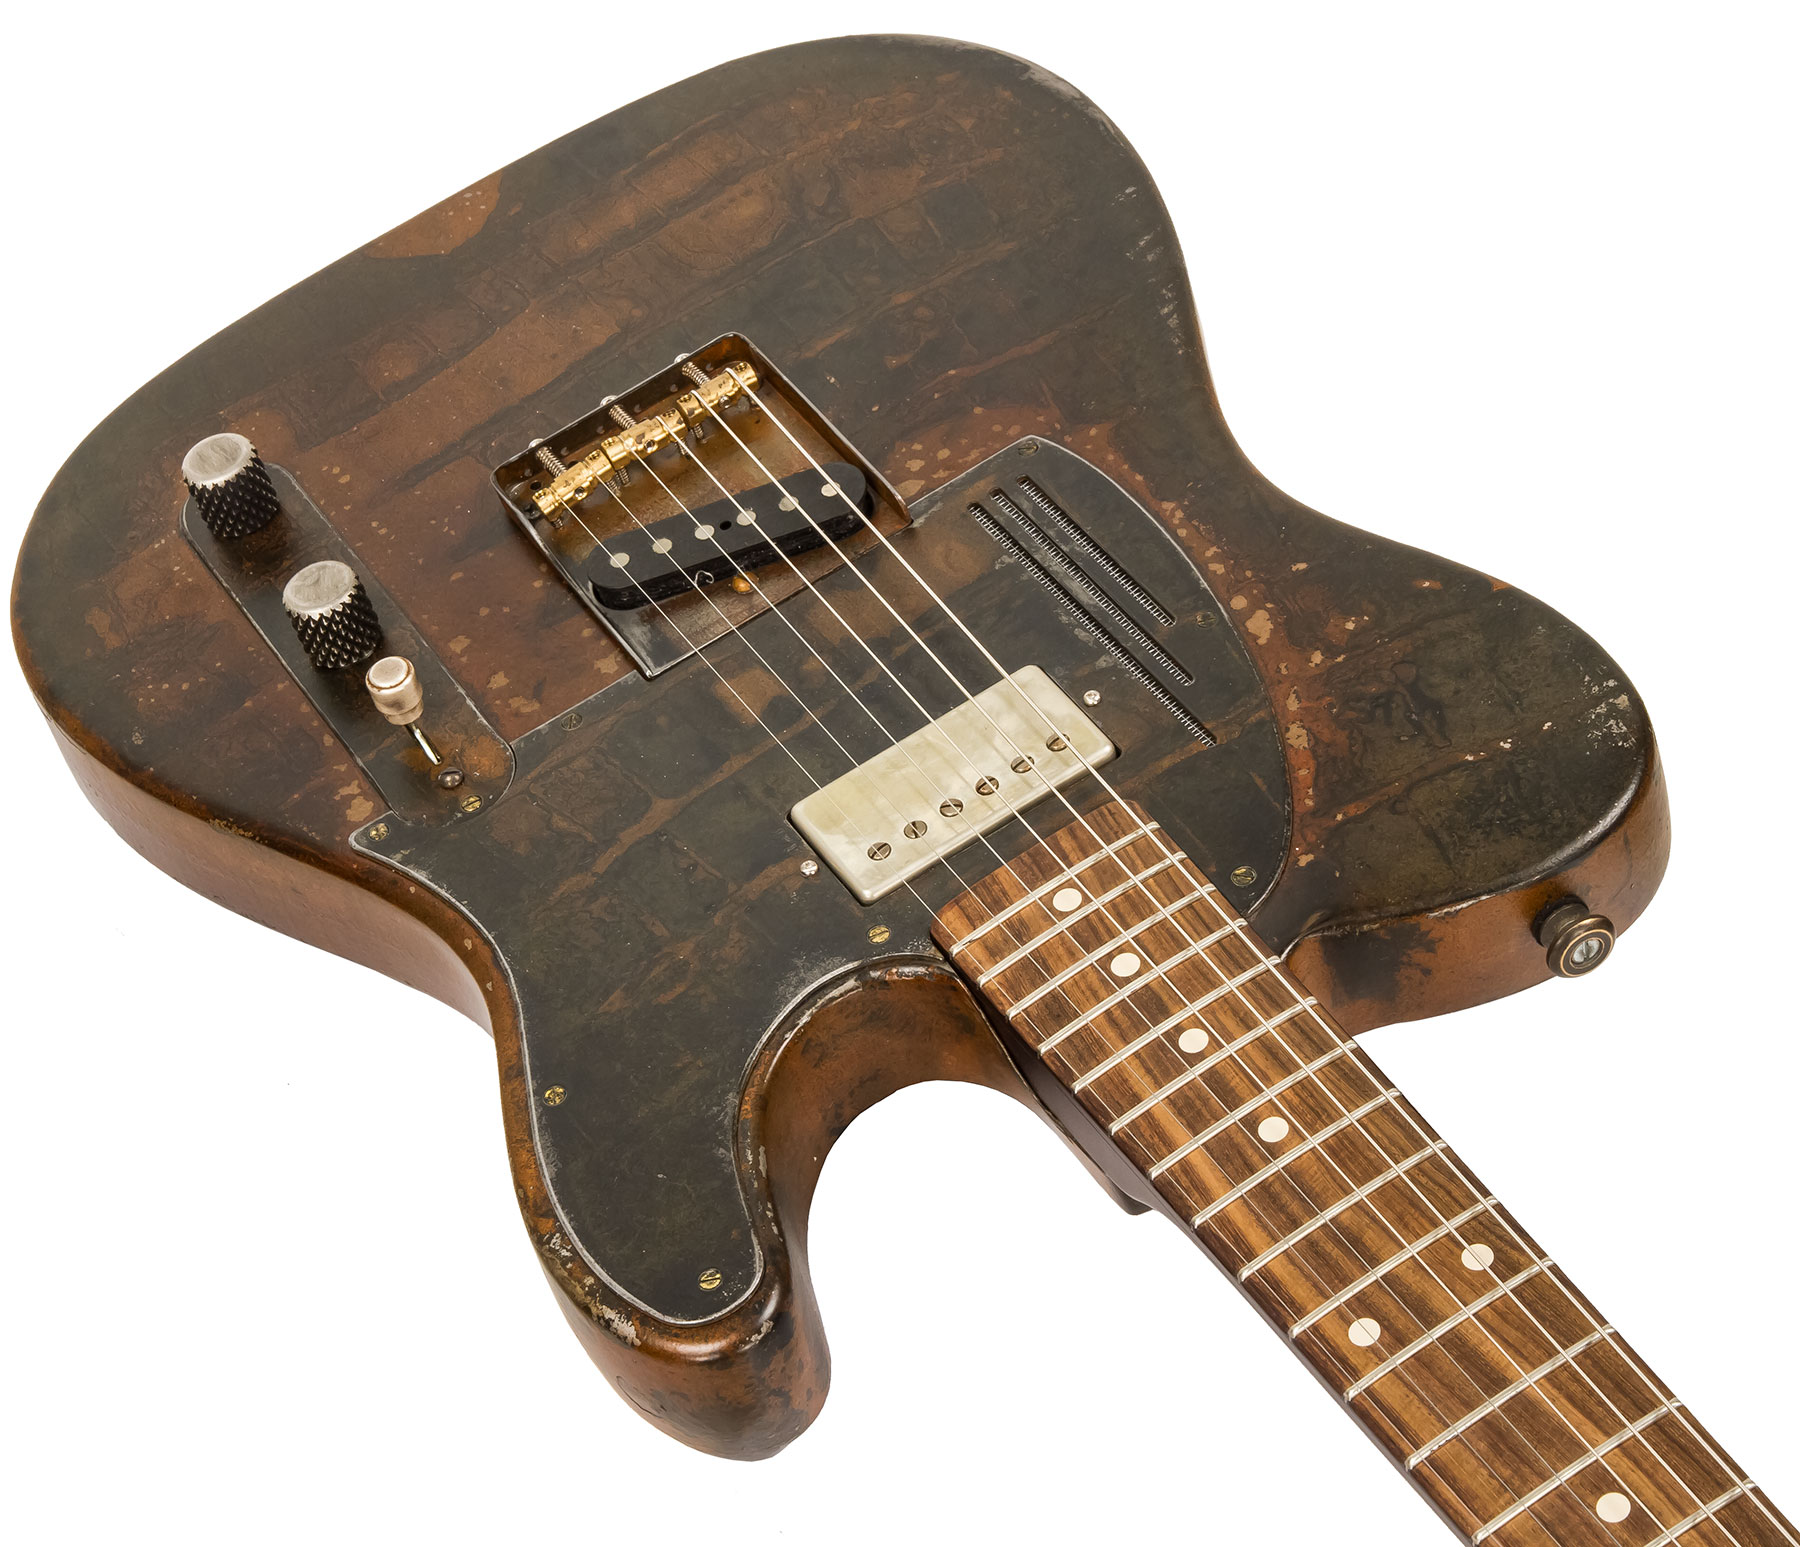 James Trussart Steelcaster Plain Back Sh Pf #20034 - Rust O Matic Gator - Semi-hollow electric guitar - Variation 2